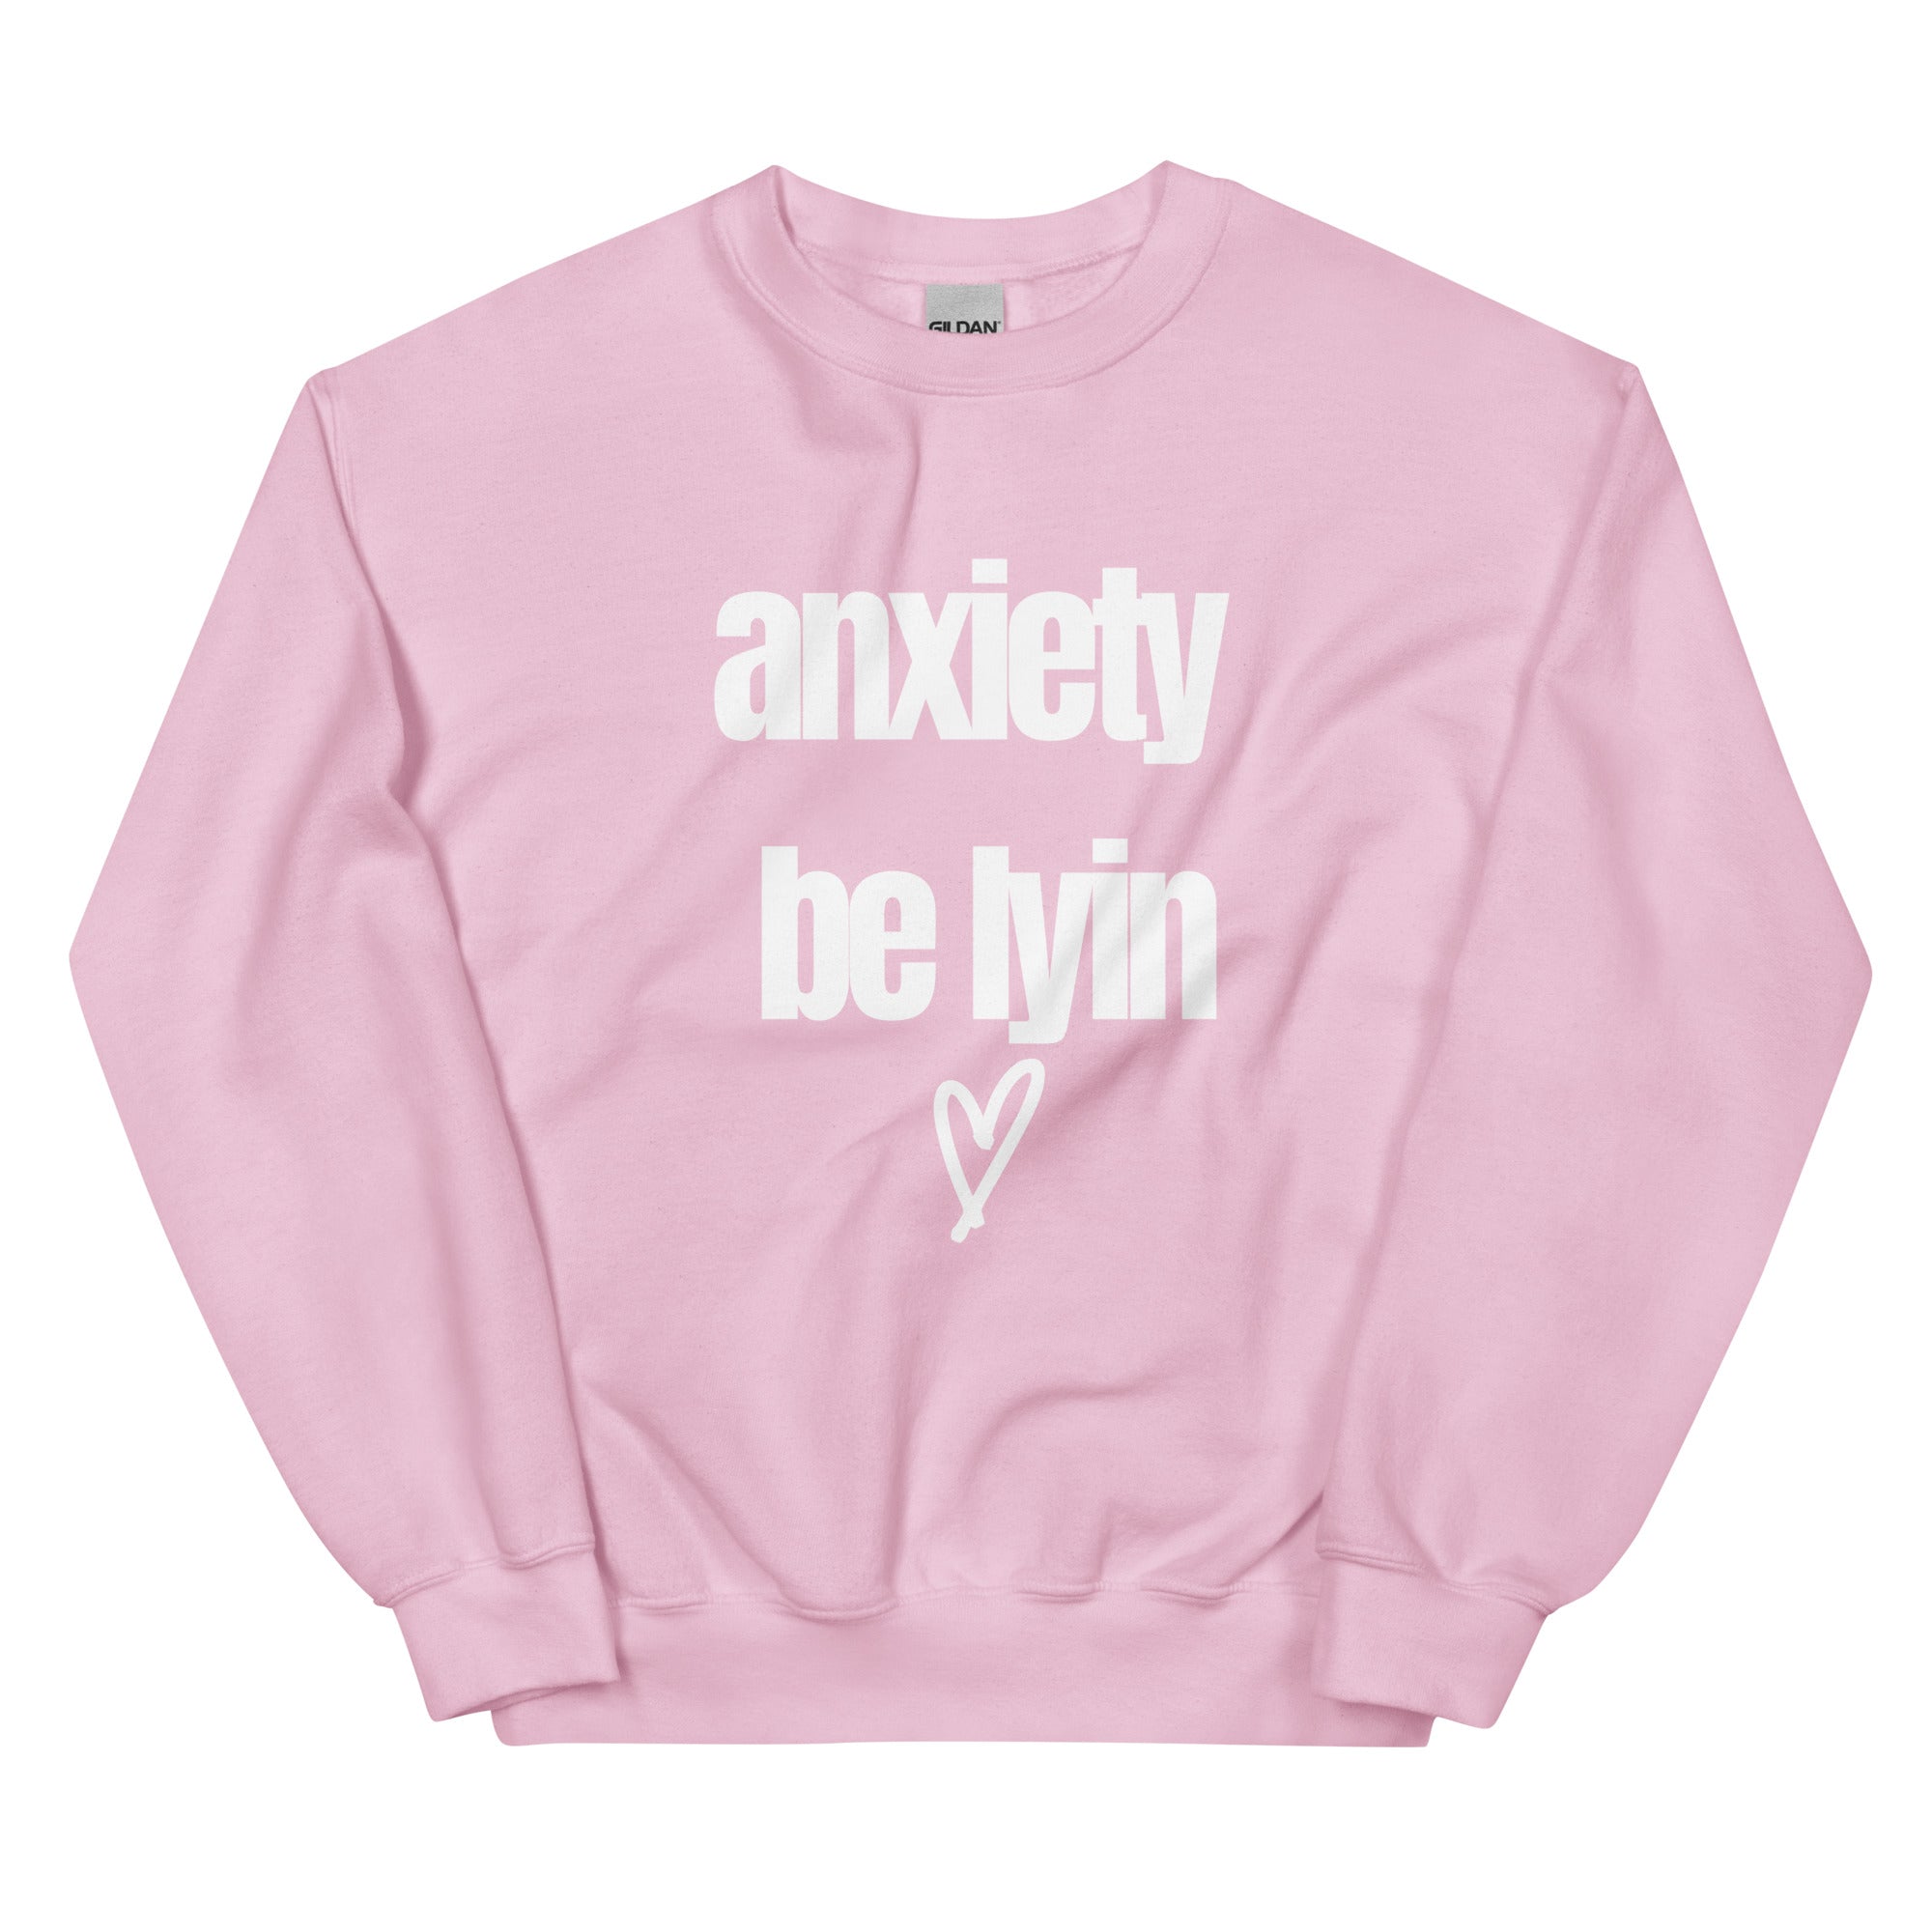 Anxiety be lyin (heart)